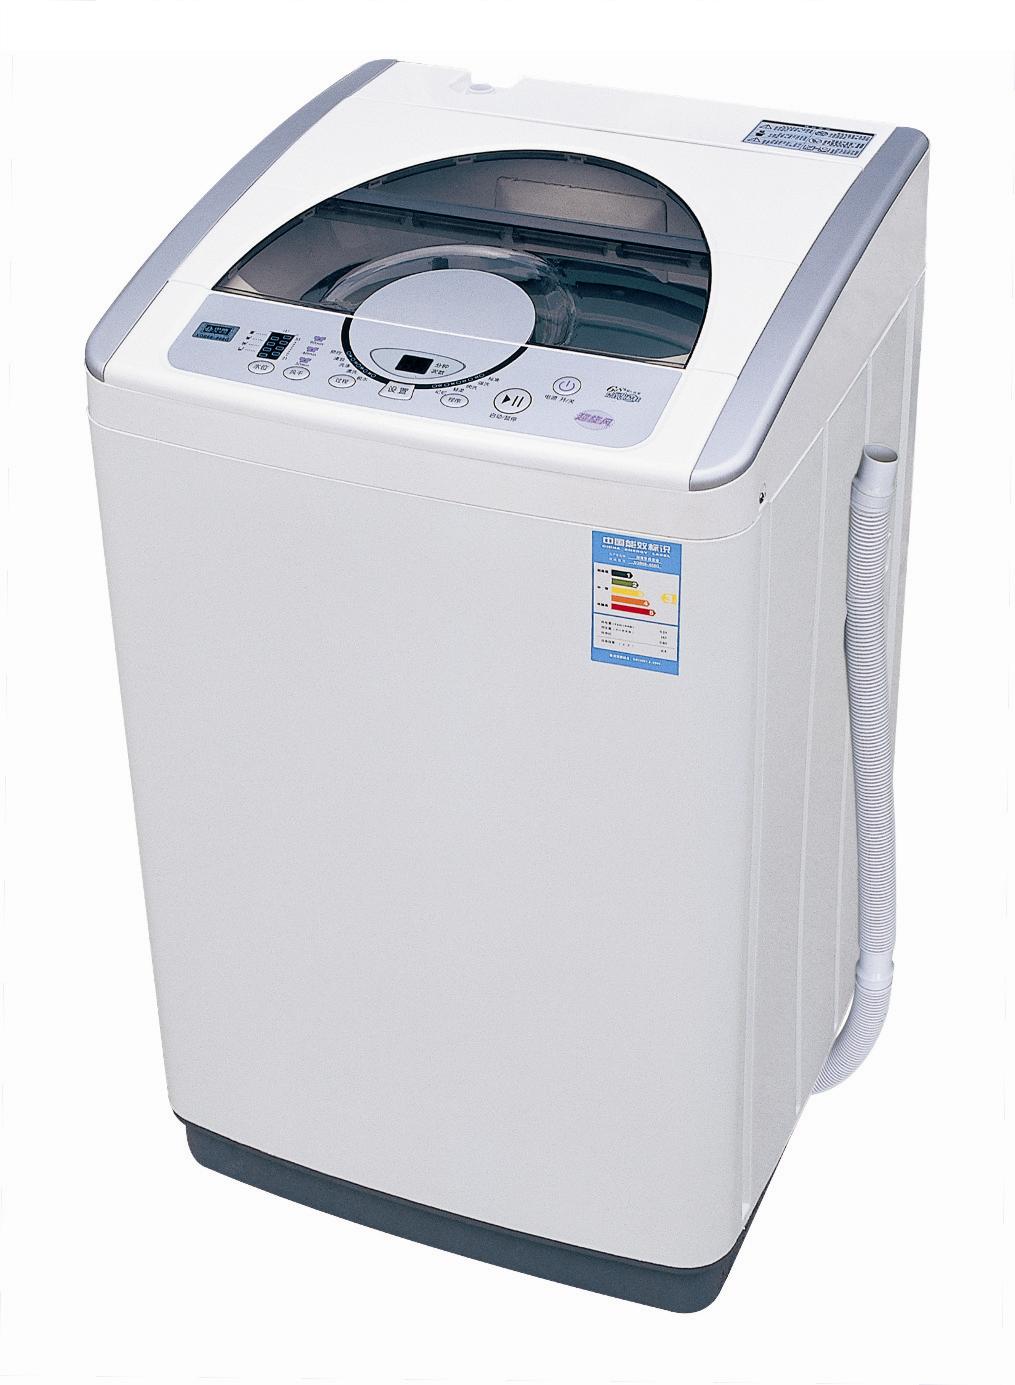 SEARS BEST WASHING MACHINE MANUALS @ Washing Machines